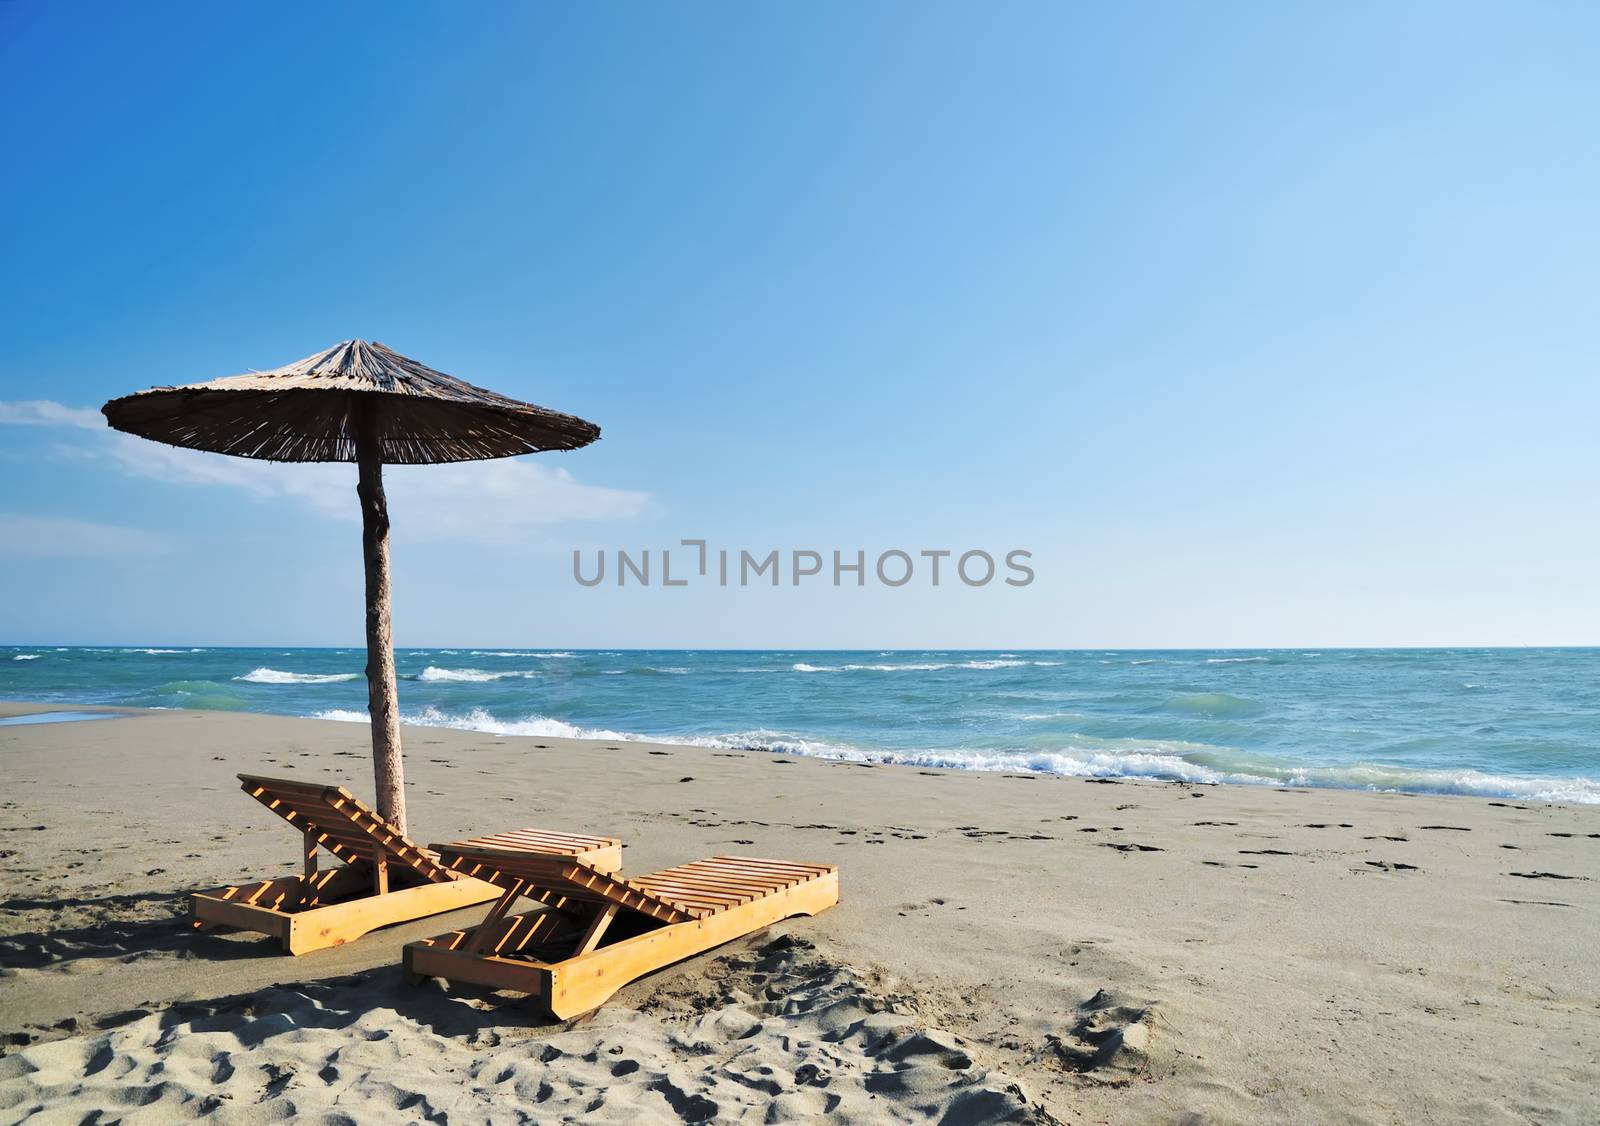 Umbrella on beach by zagart36